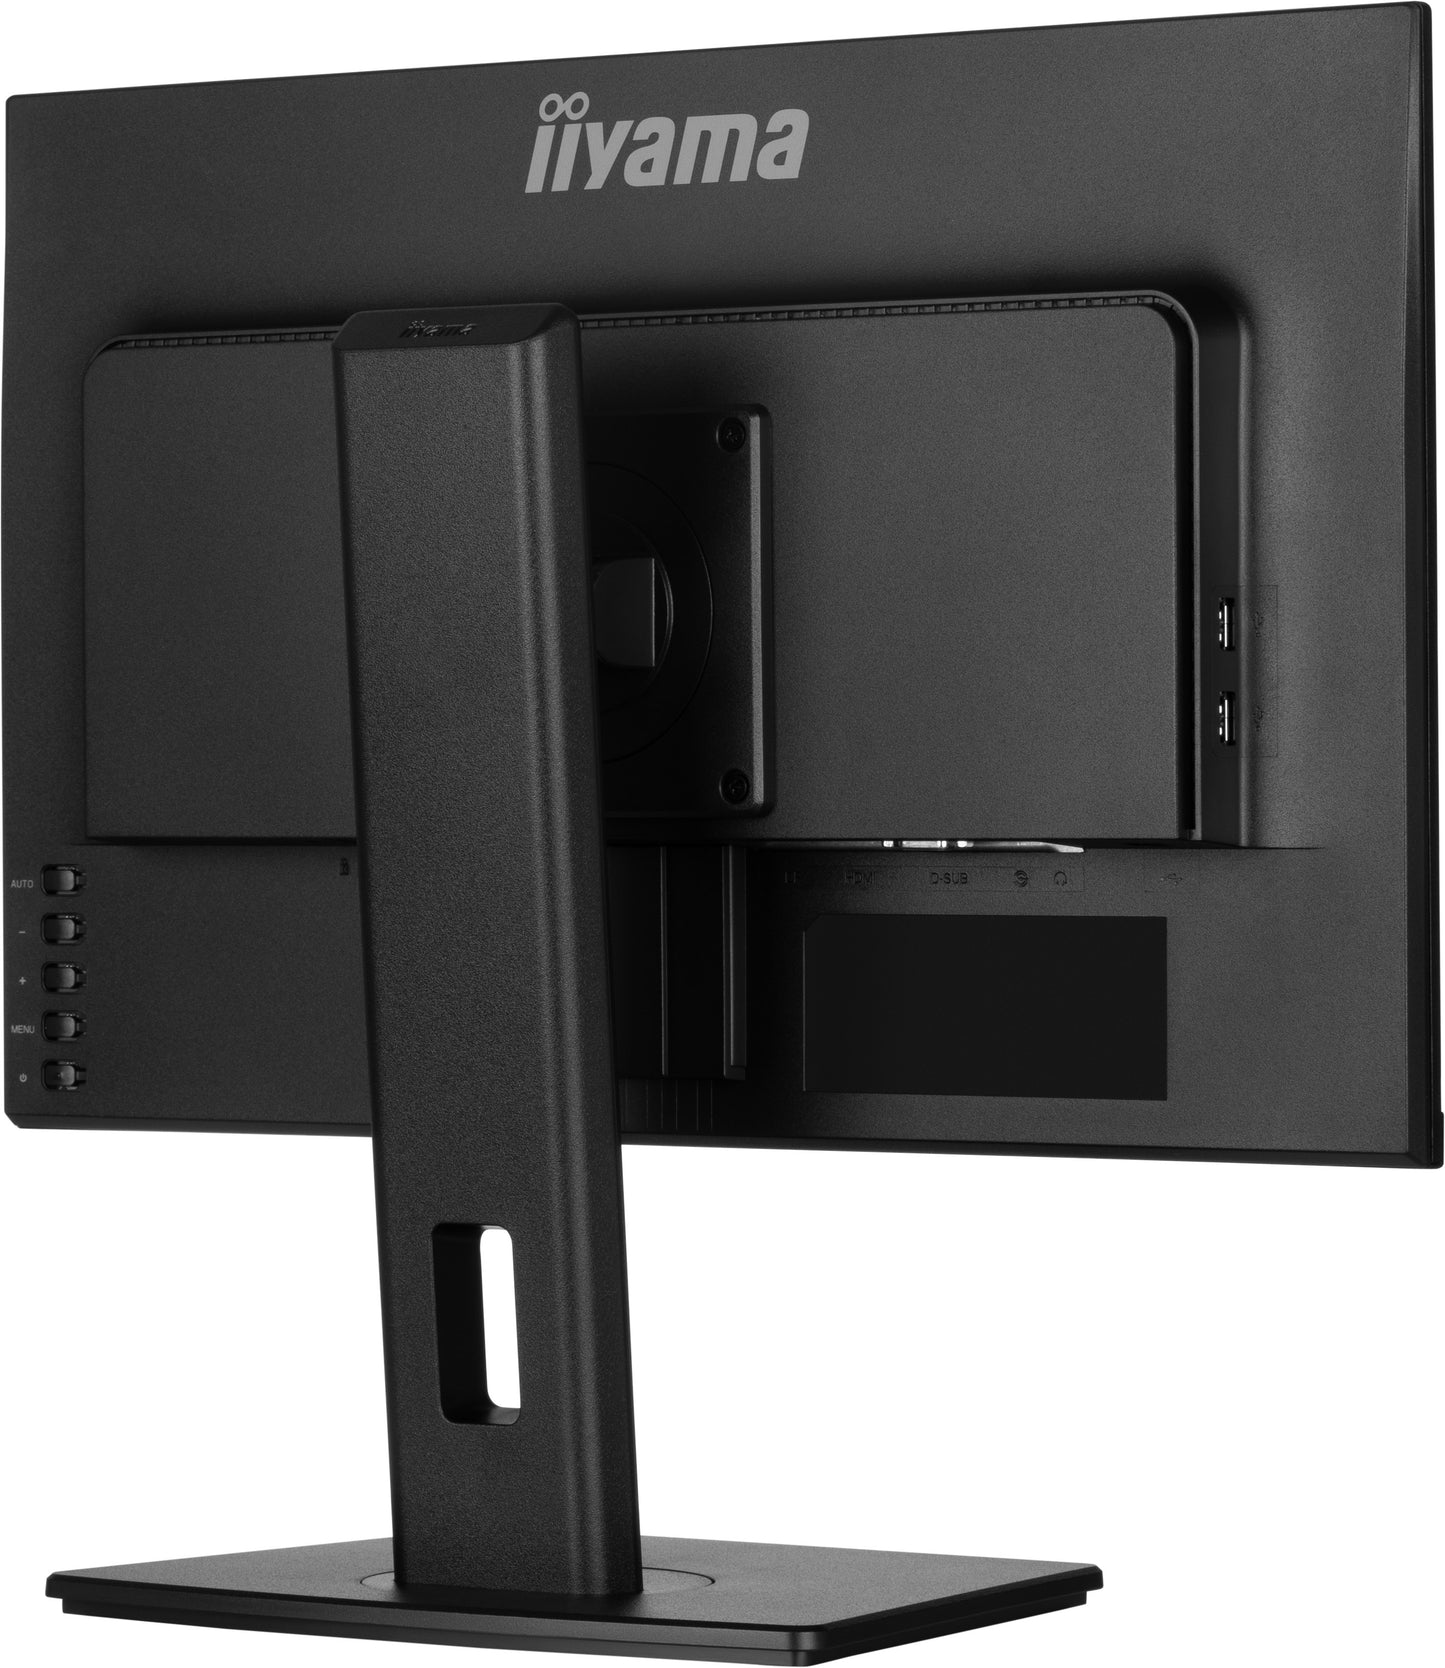 iiyama ProLite XUB2395WSU-B5 22.5” 1920 x 1200 monitor featuring IPS panel technology and a height adjustable stand